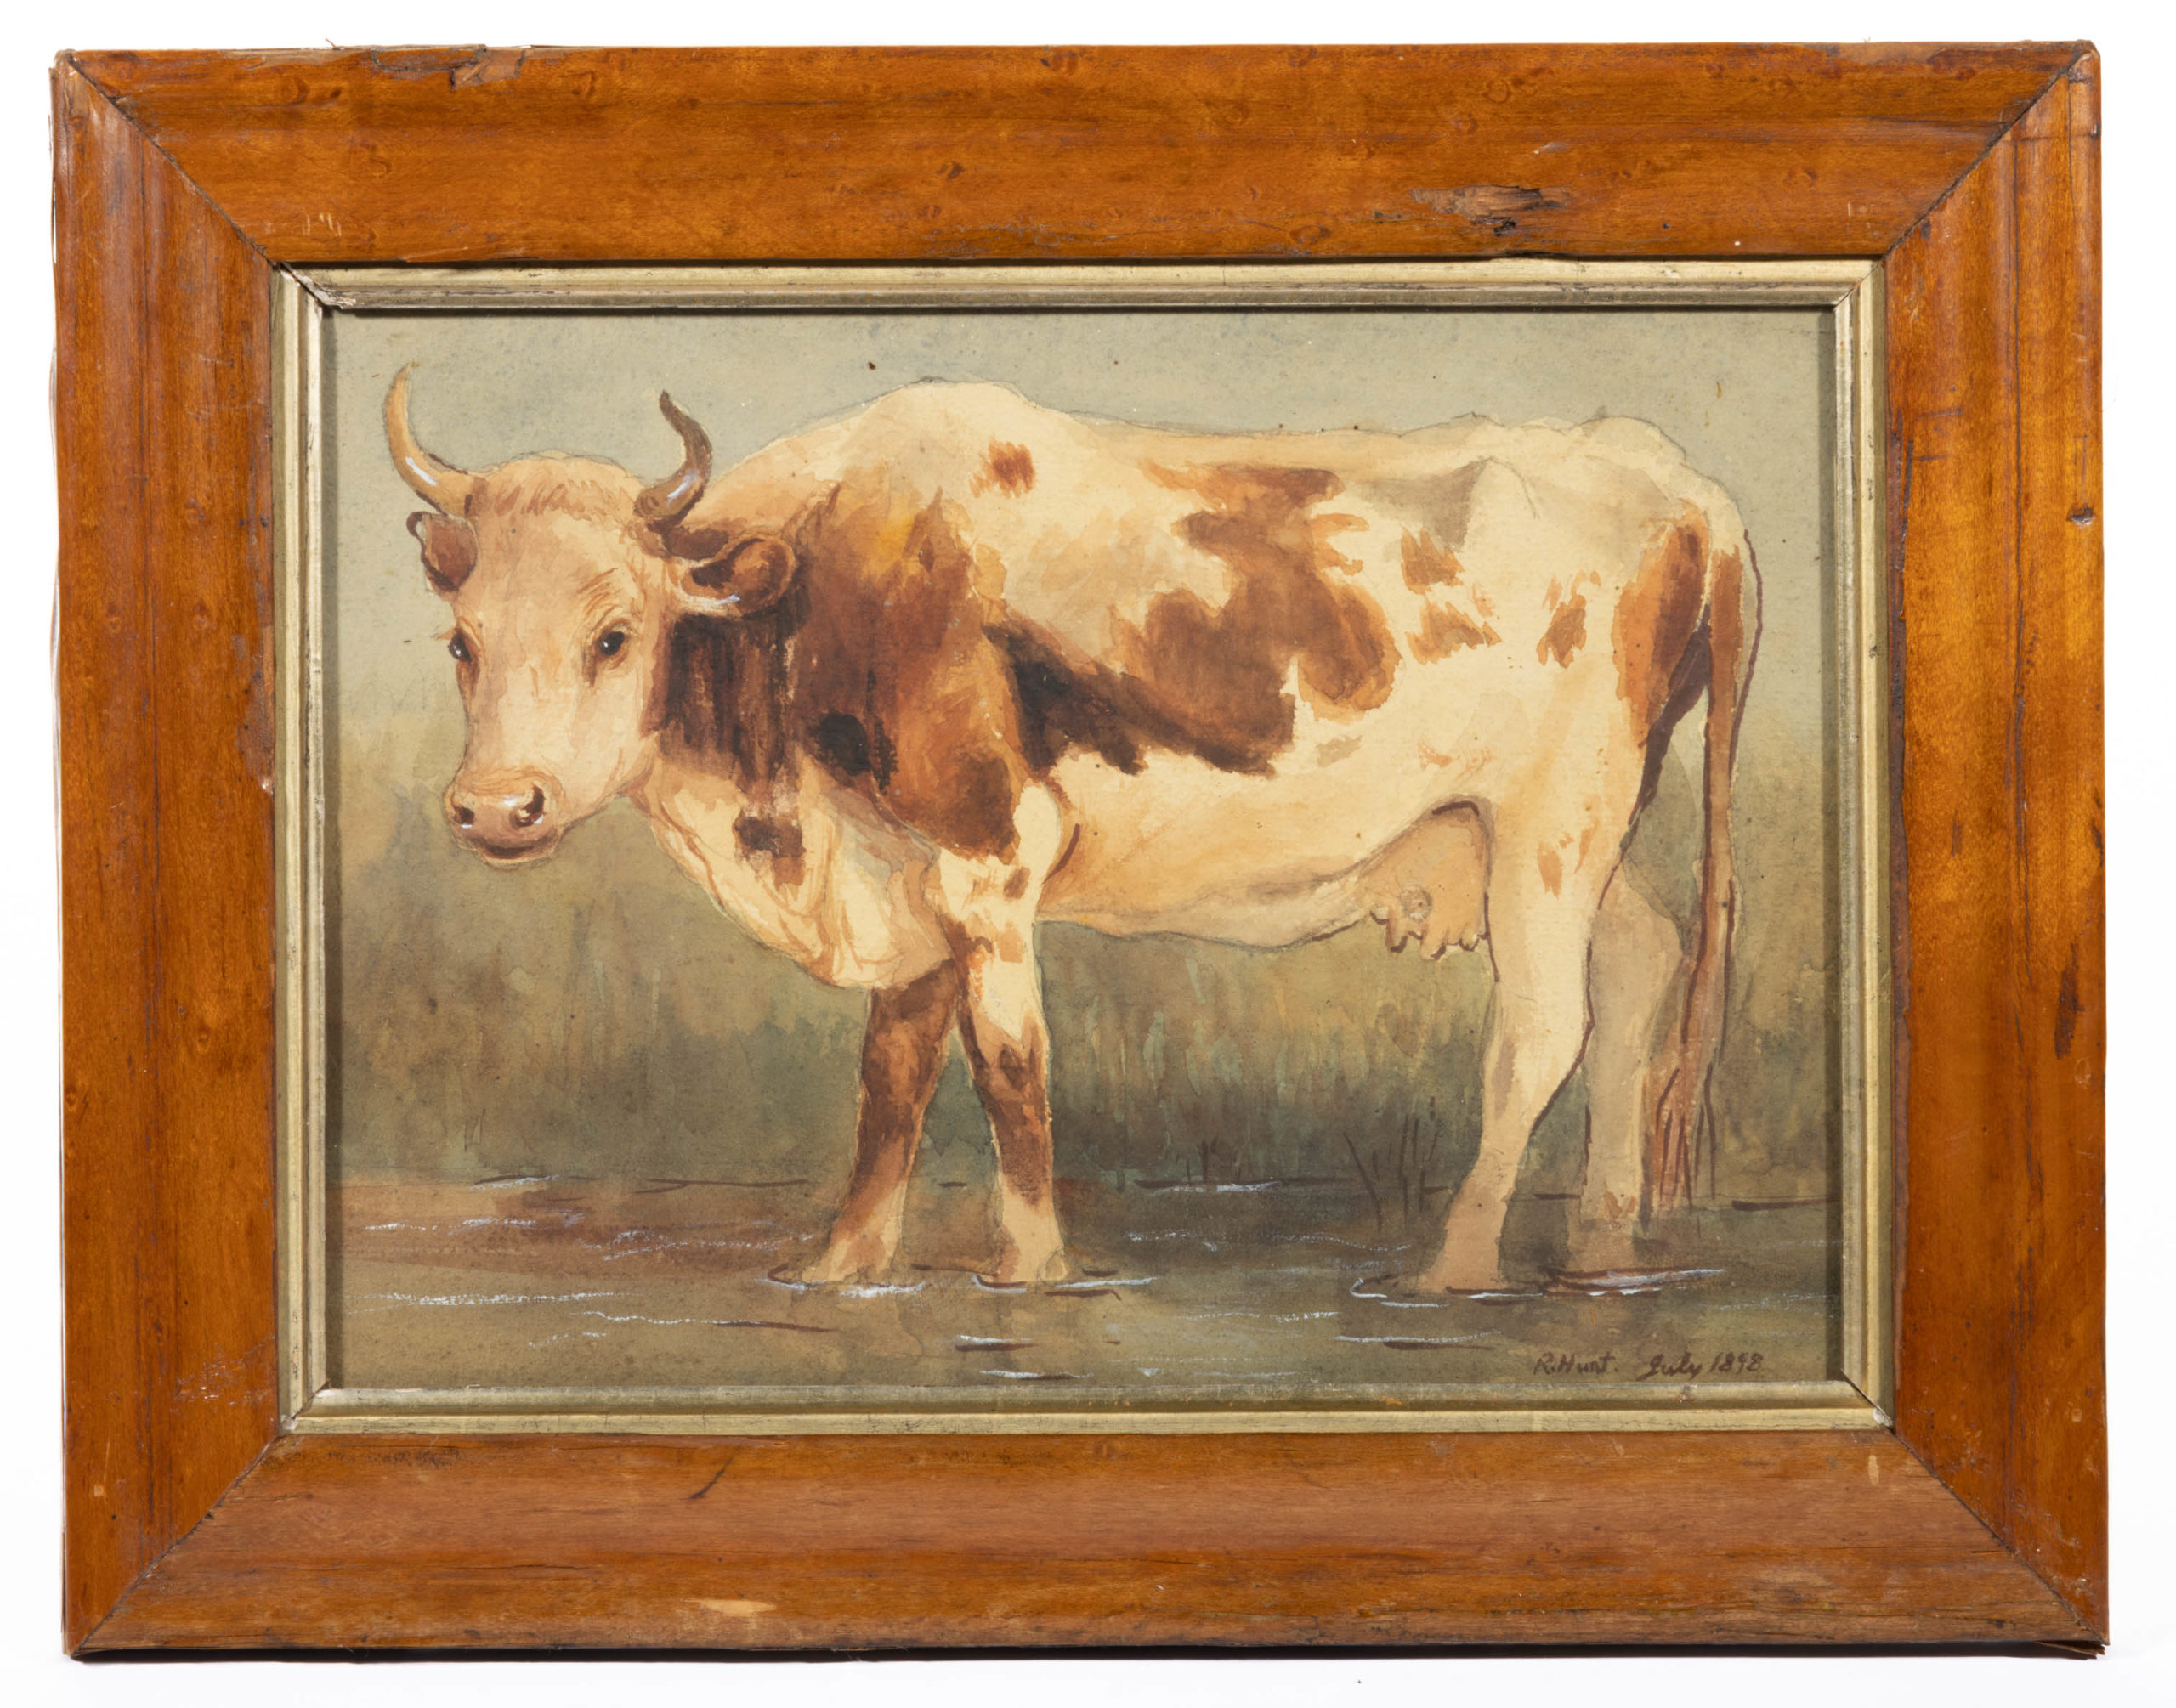 AMERICAN / BRITISH SCHOOL (LATE 19TH CENTURY) FOLK ART PAINTING OF A COW,